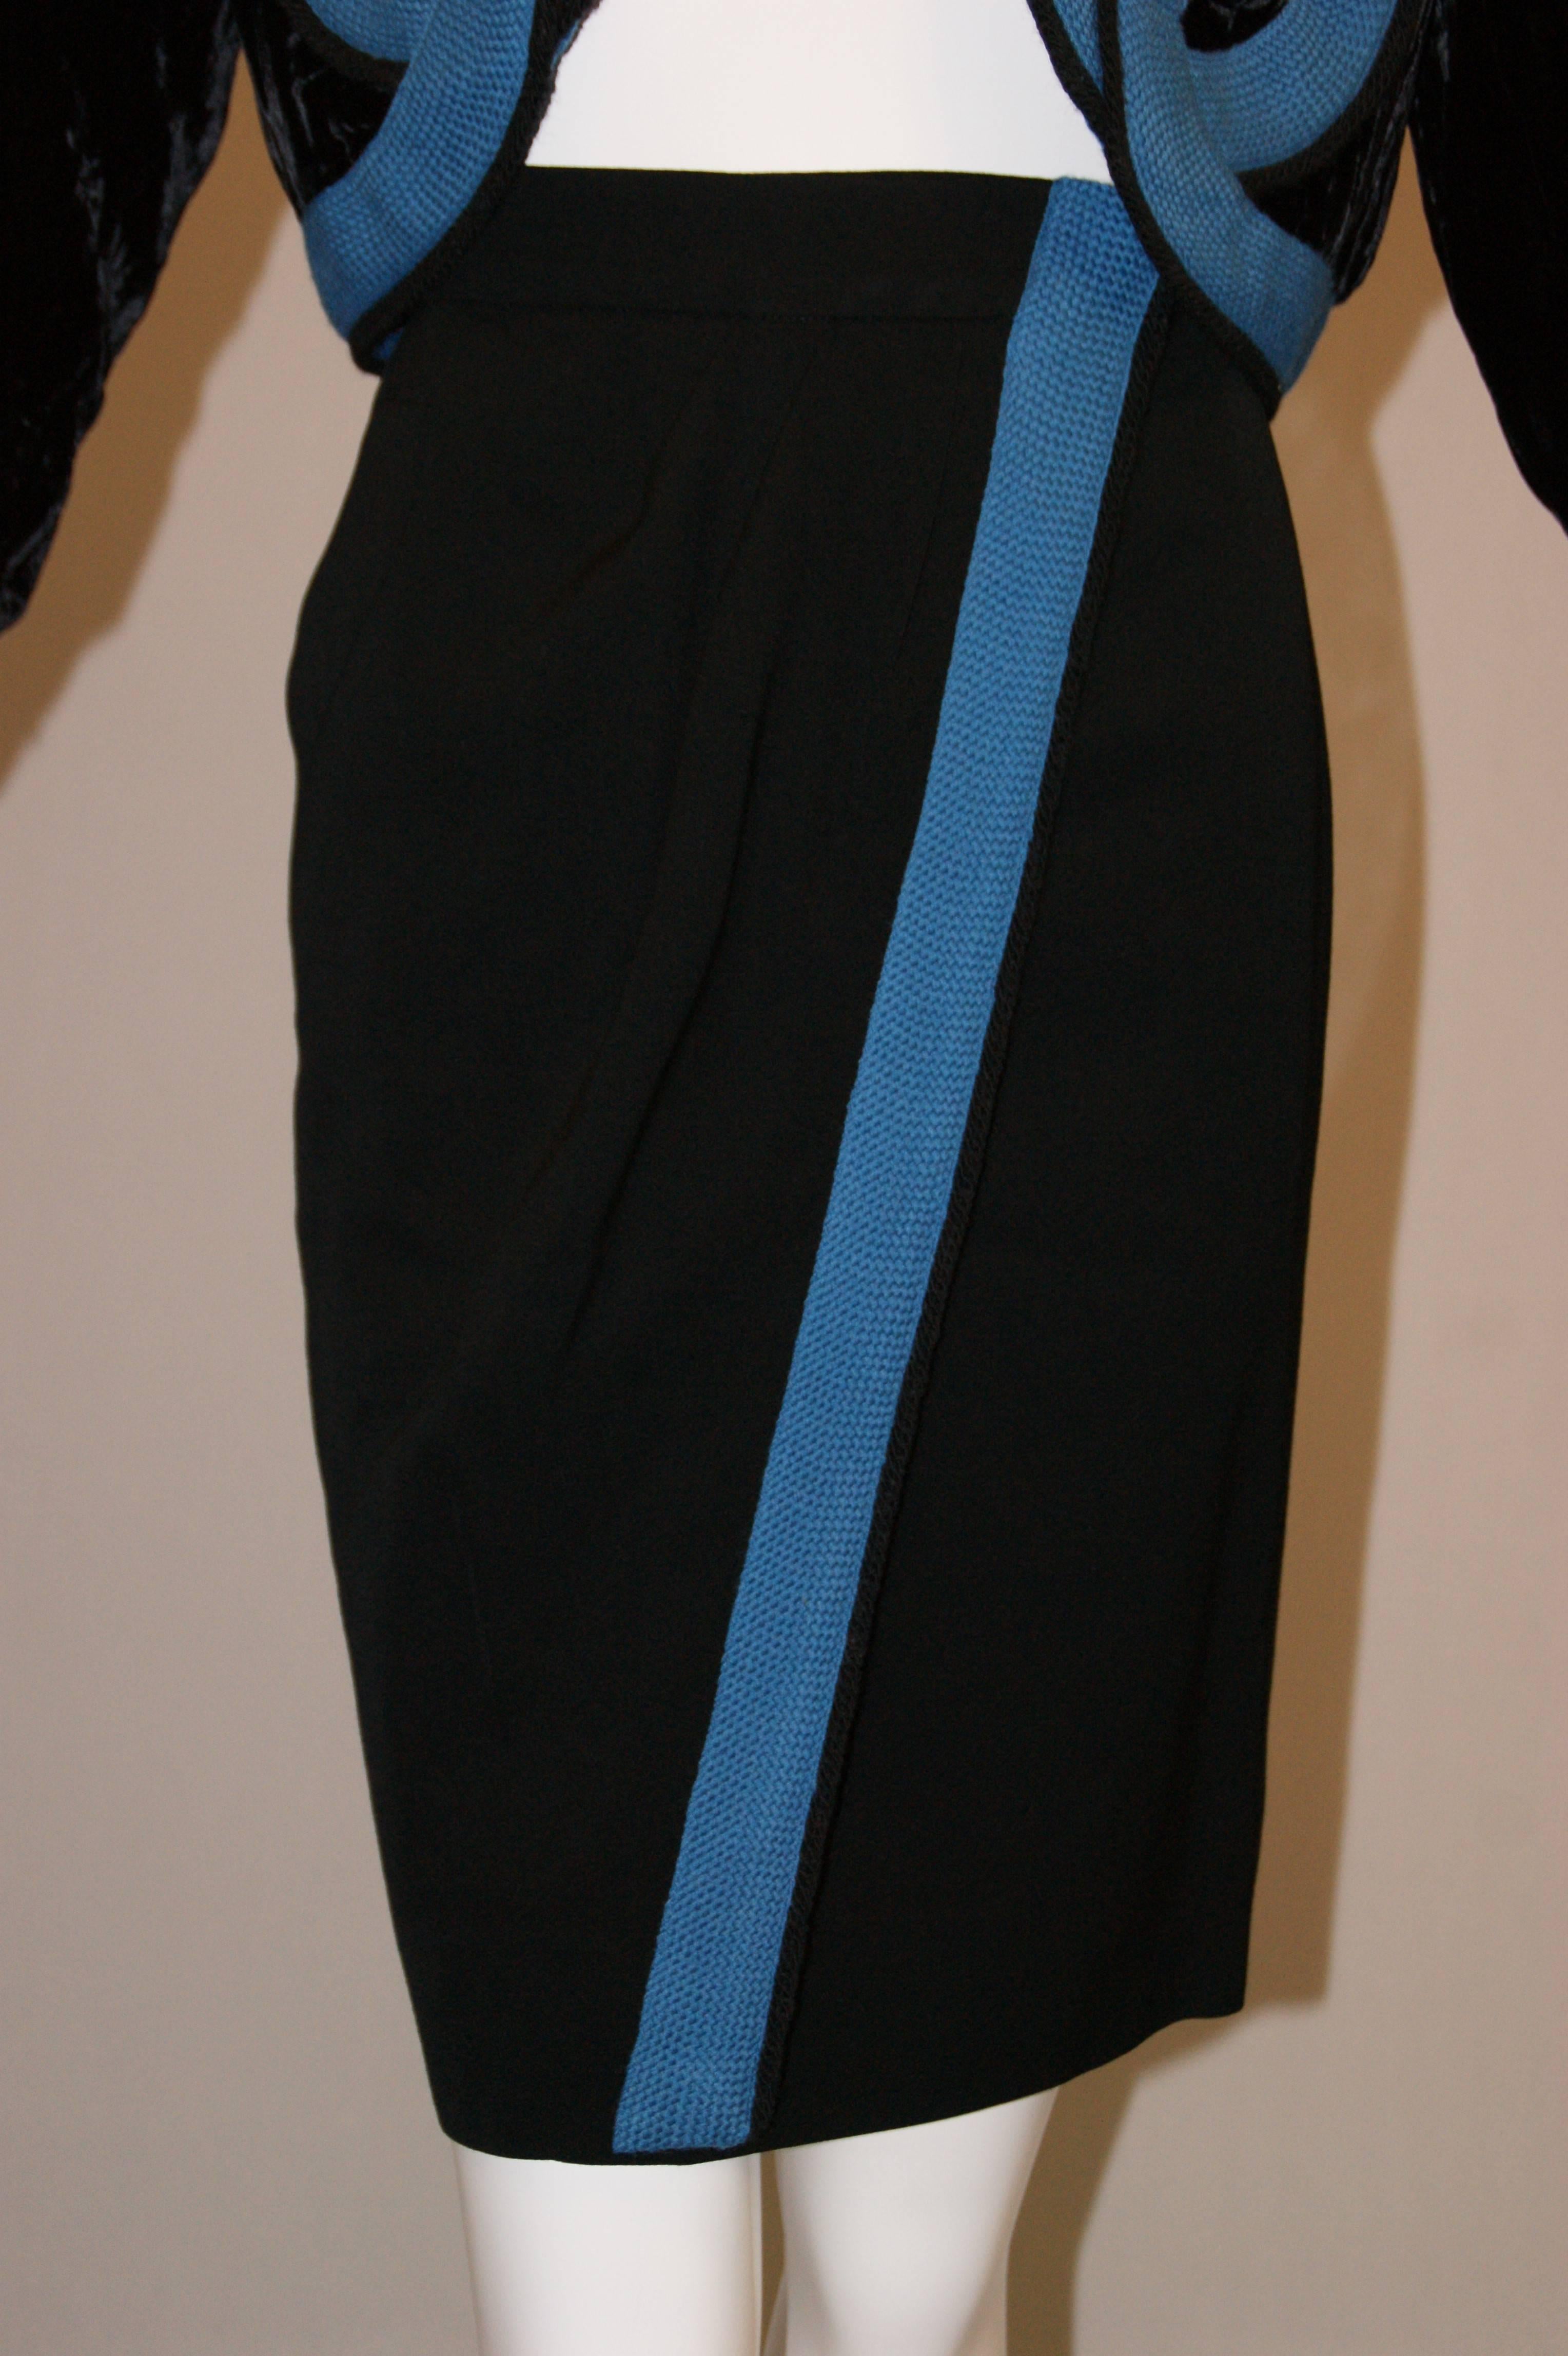 S/S 1991 Yves Saint Laurent Woven Rope Trim Toreador Crop Jacket Skirt Suit 2